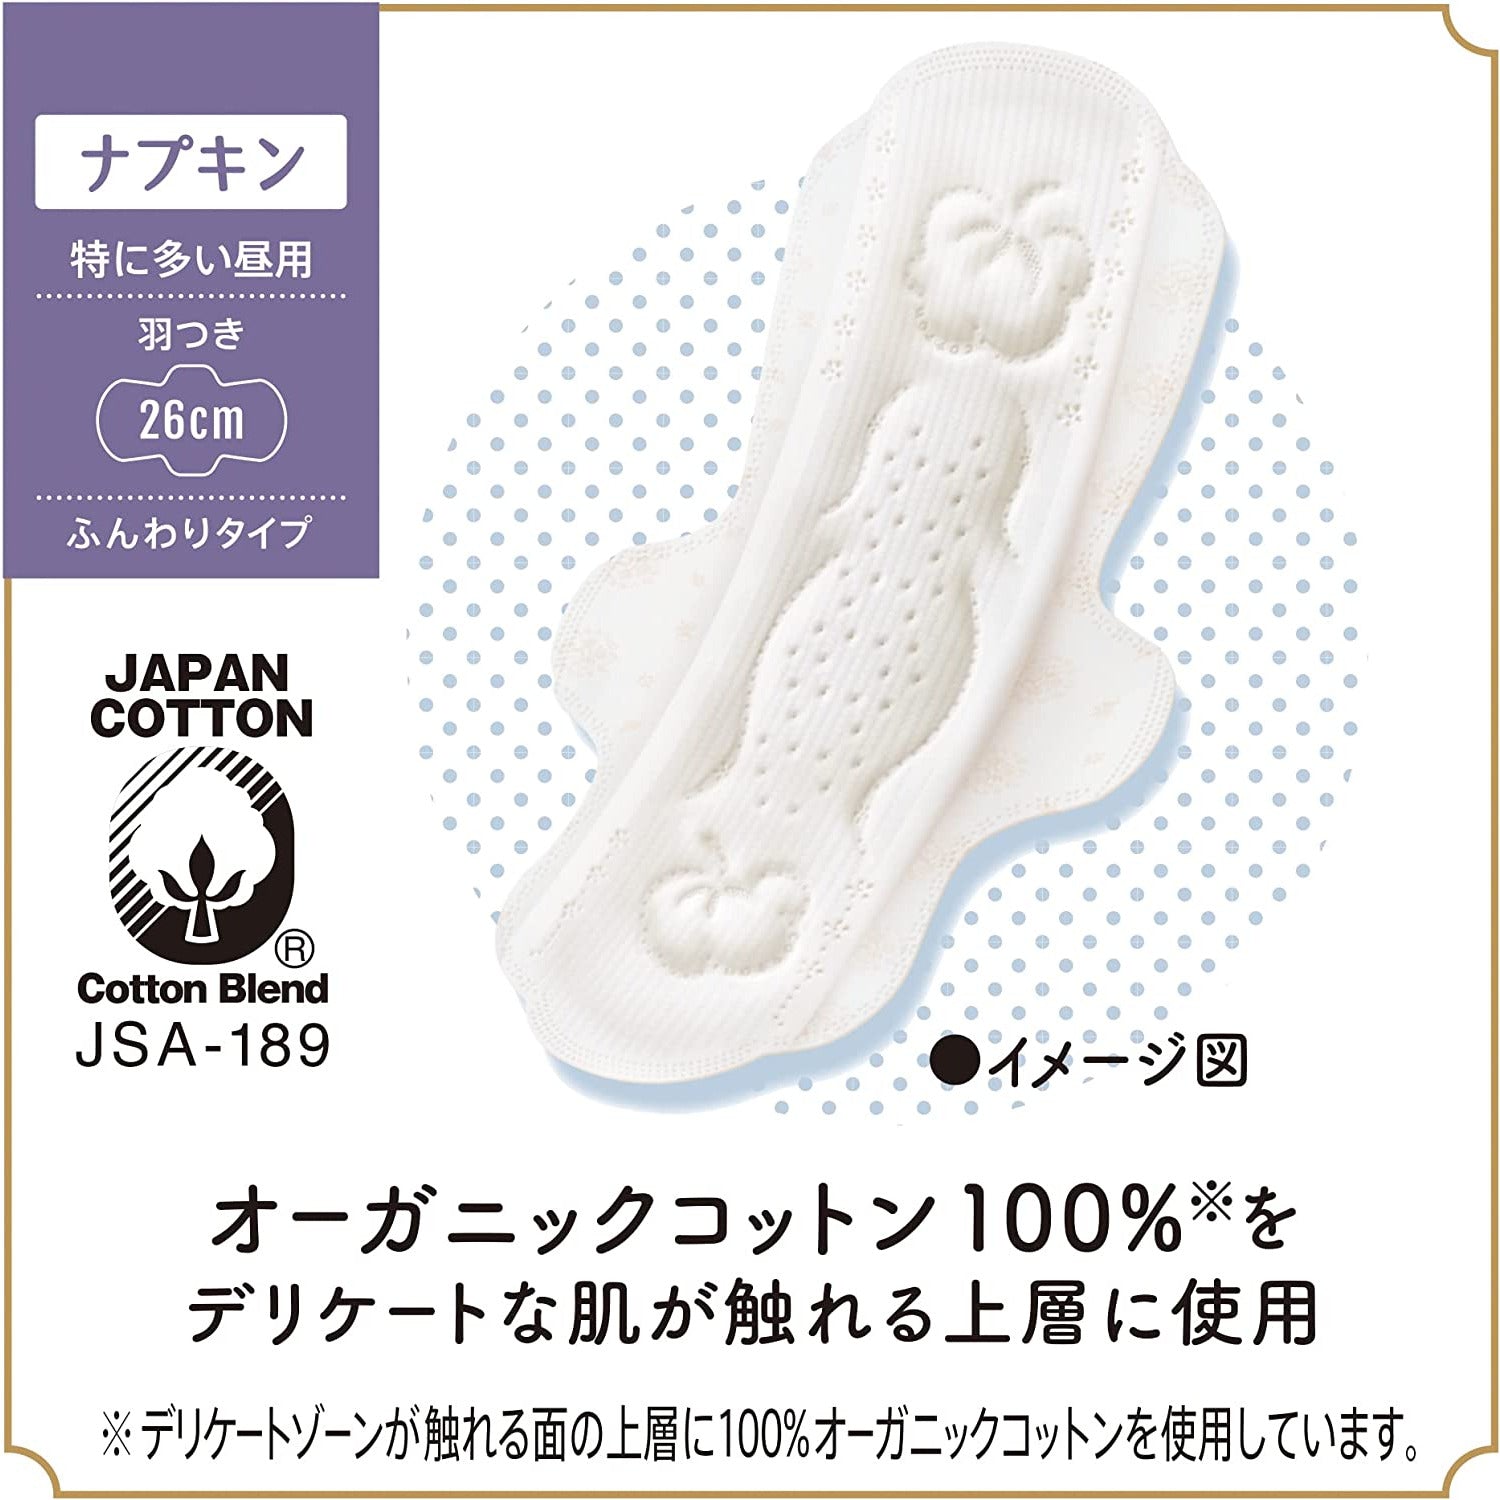 Unicharm Sofy sanitary napkin Hadaomoi organic cotton with wings 26cm 13 sheets